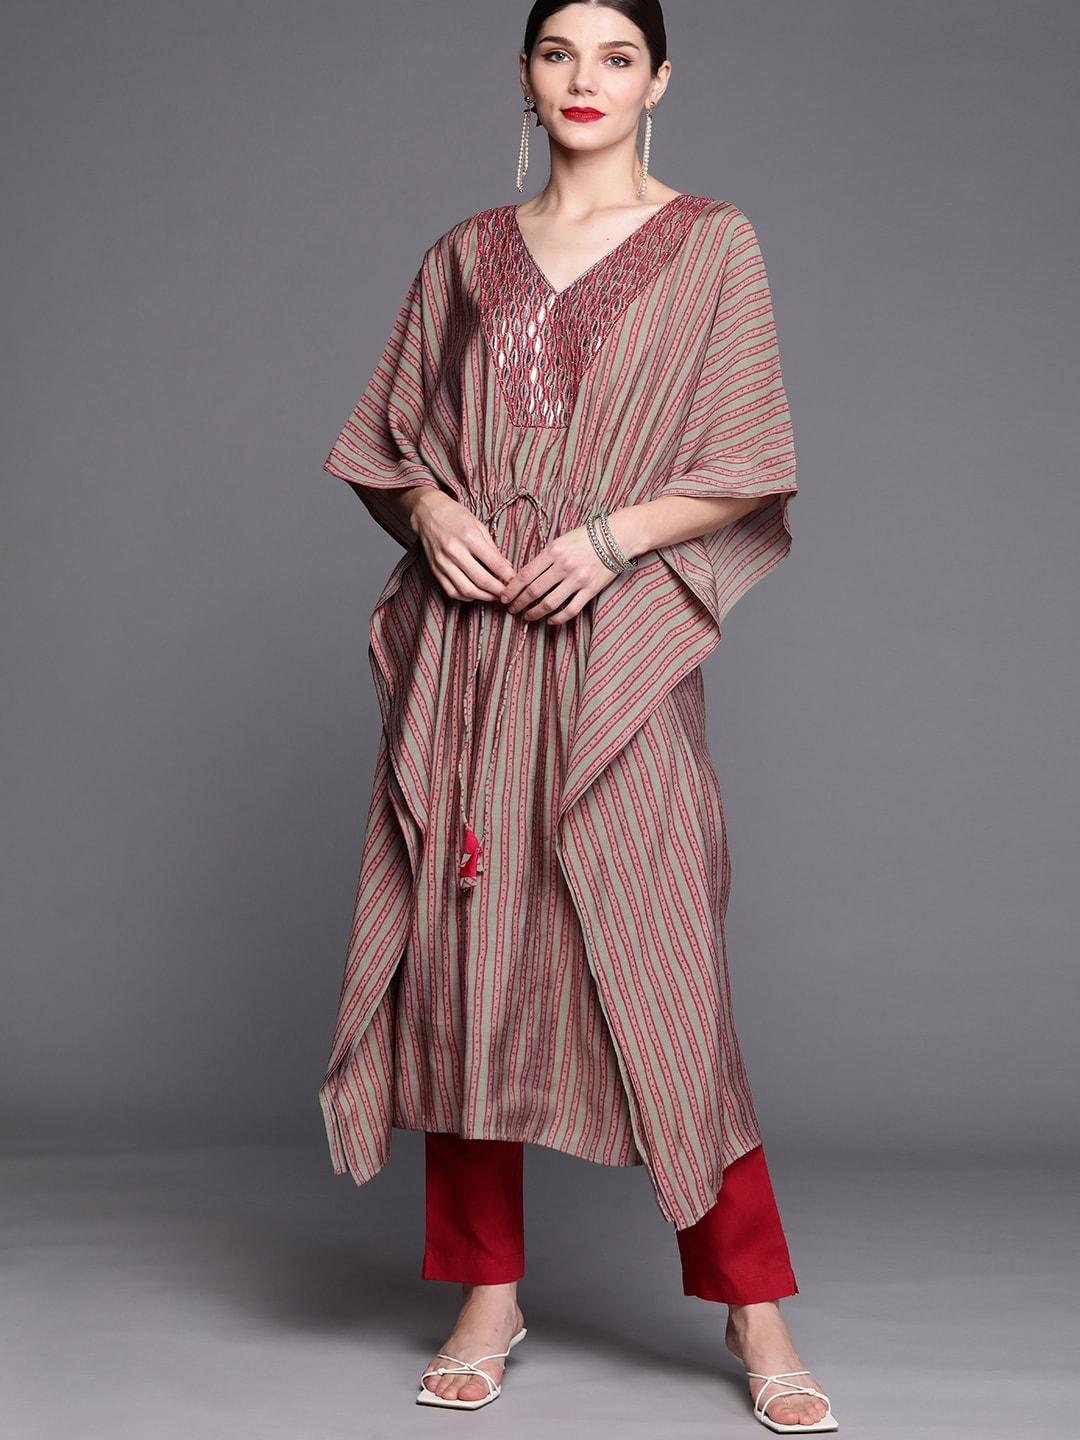 inddus women grey & pink yoke design extended sleeves thread work kaftan kurta